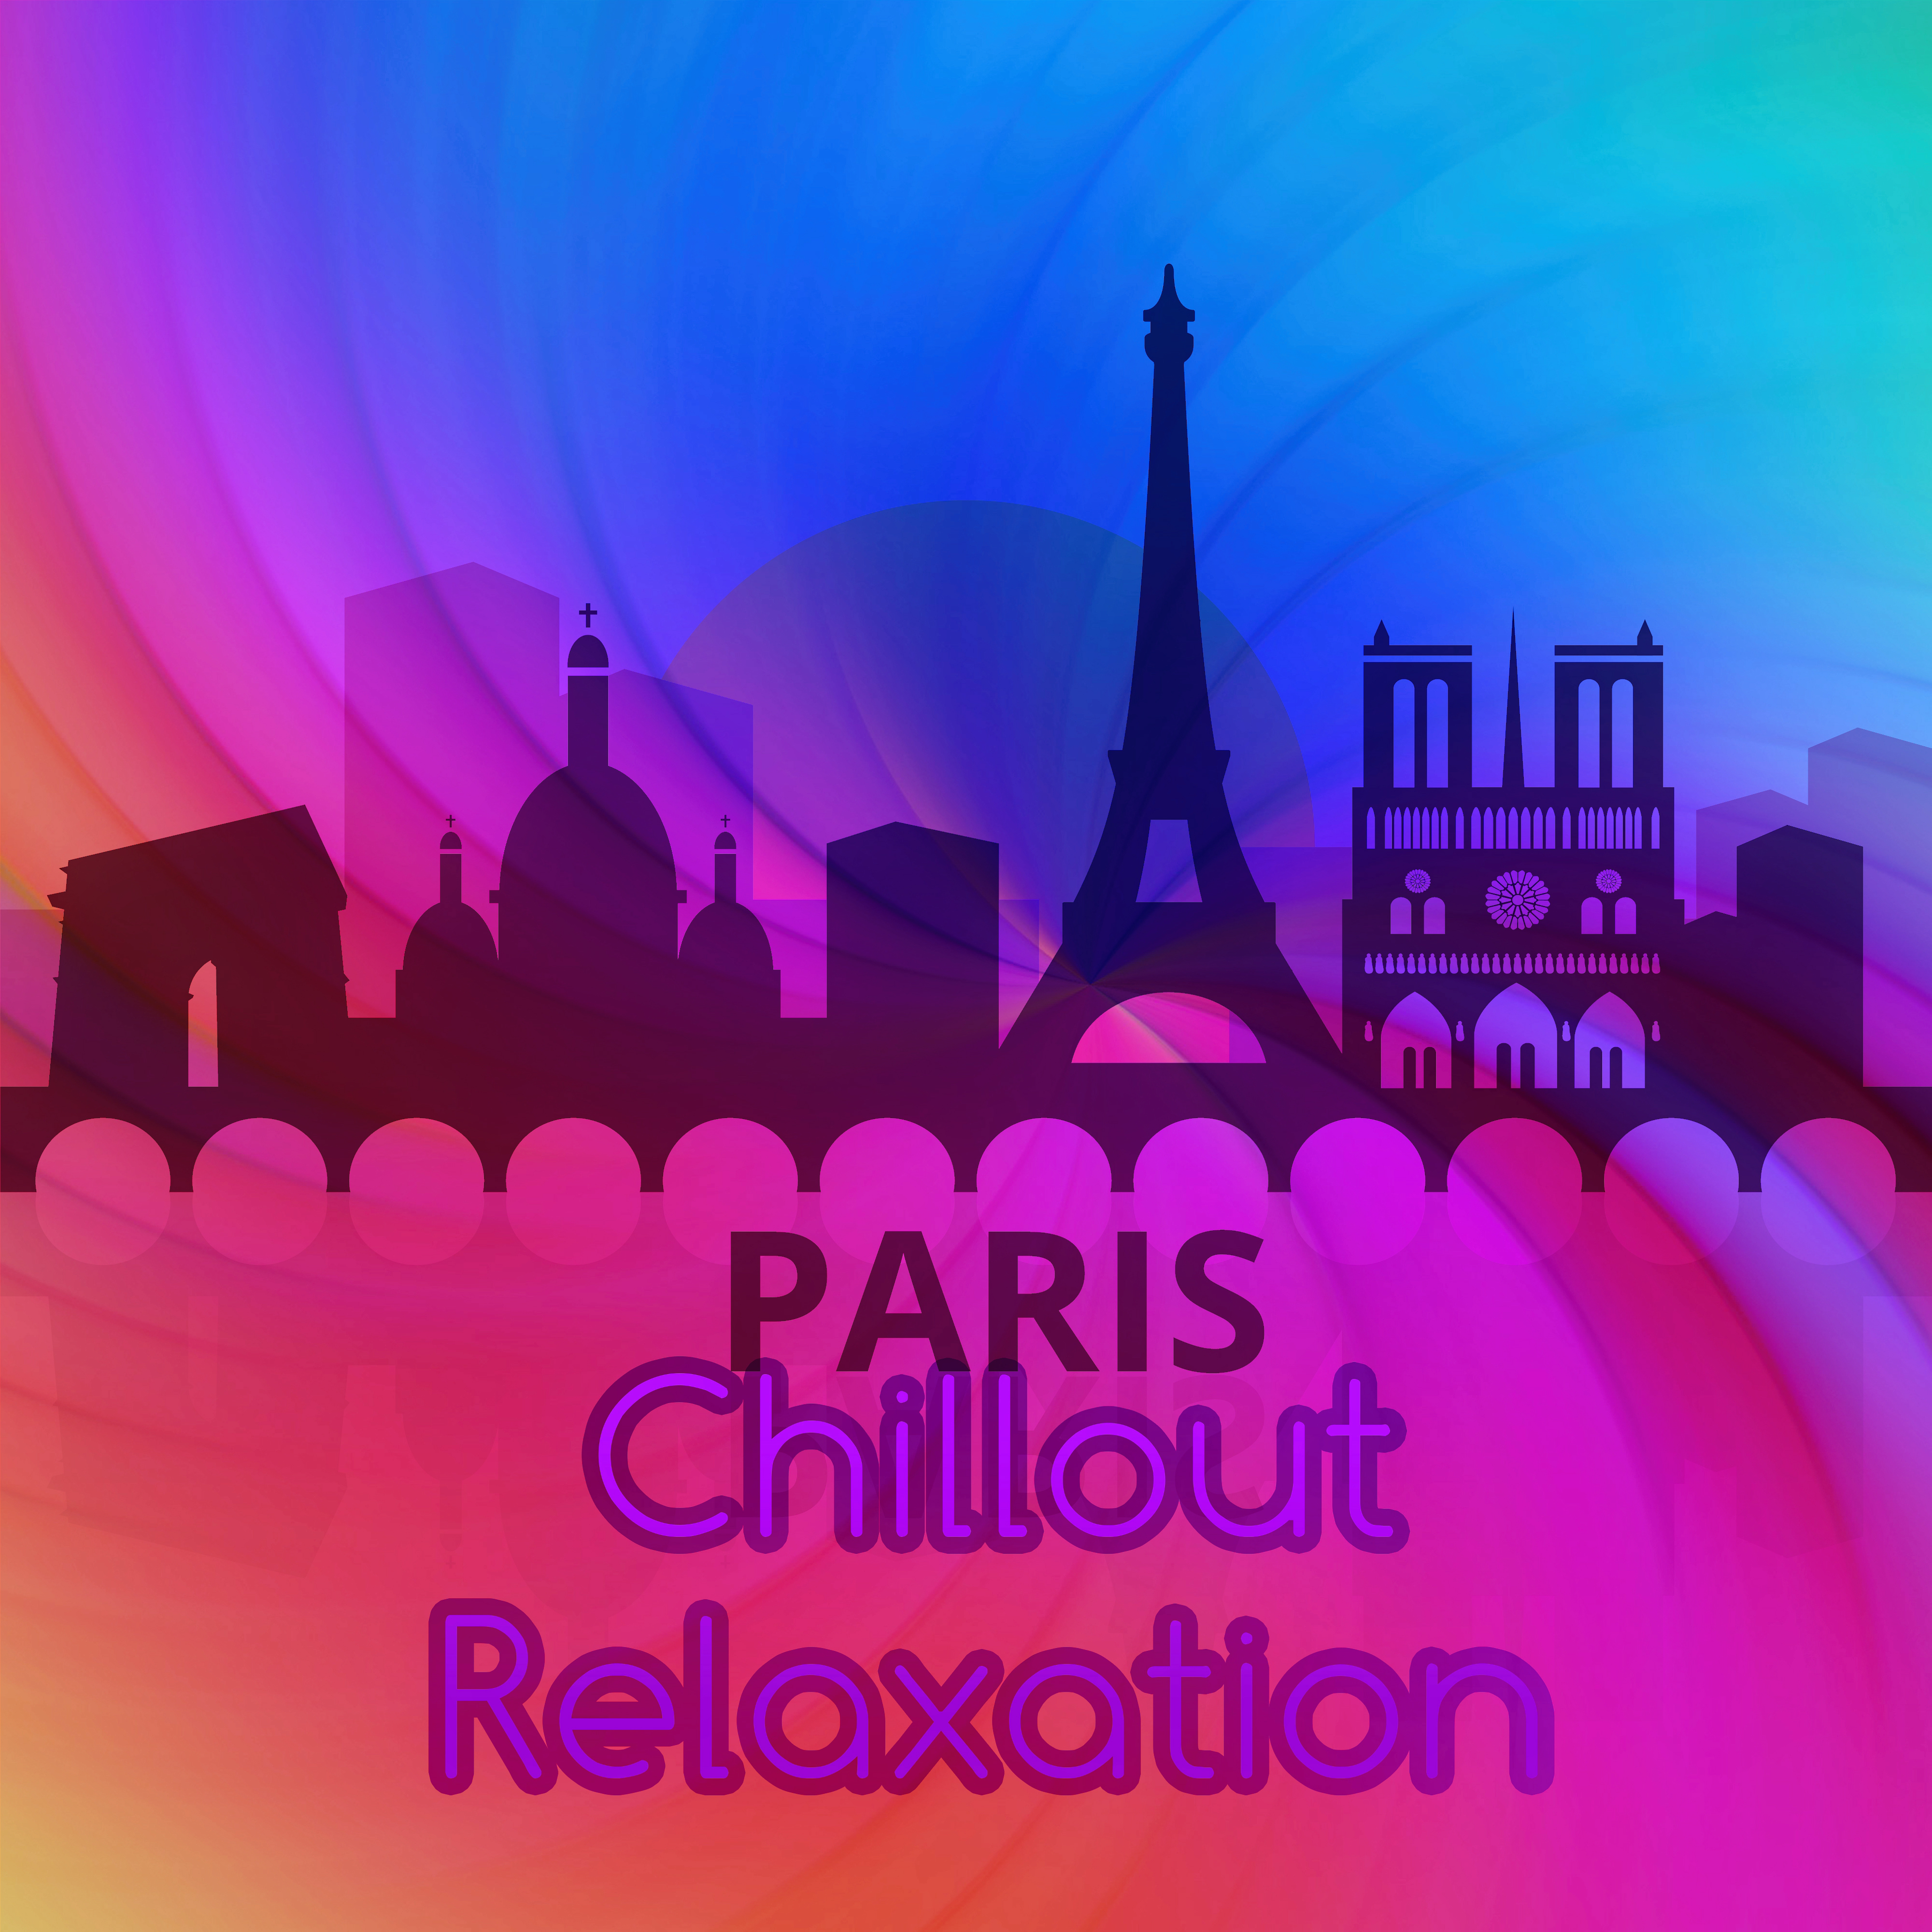 Paris Chillout Relaxation  Vital Energy, Positive Vibration, Break, Restful, Calming Music, Regeneration